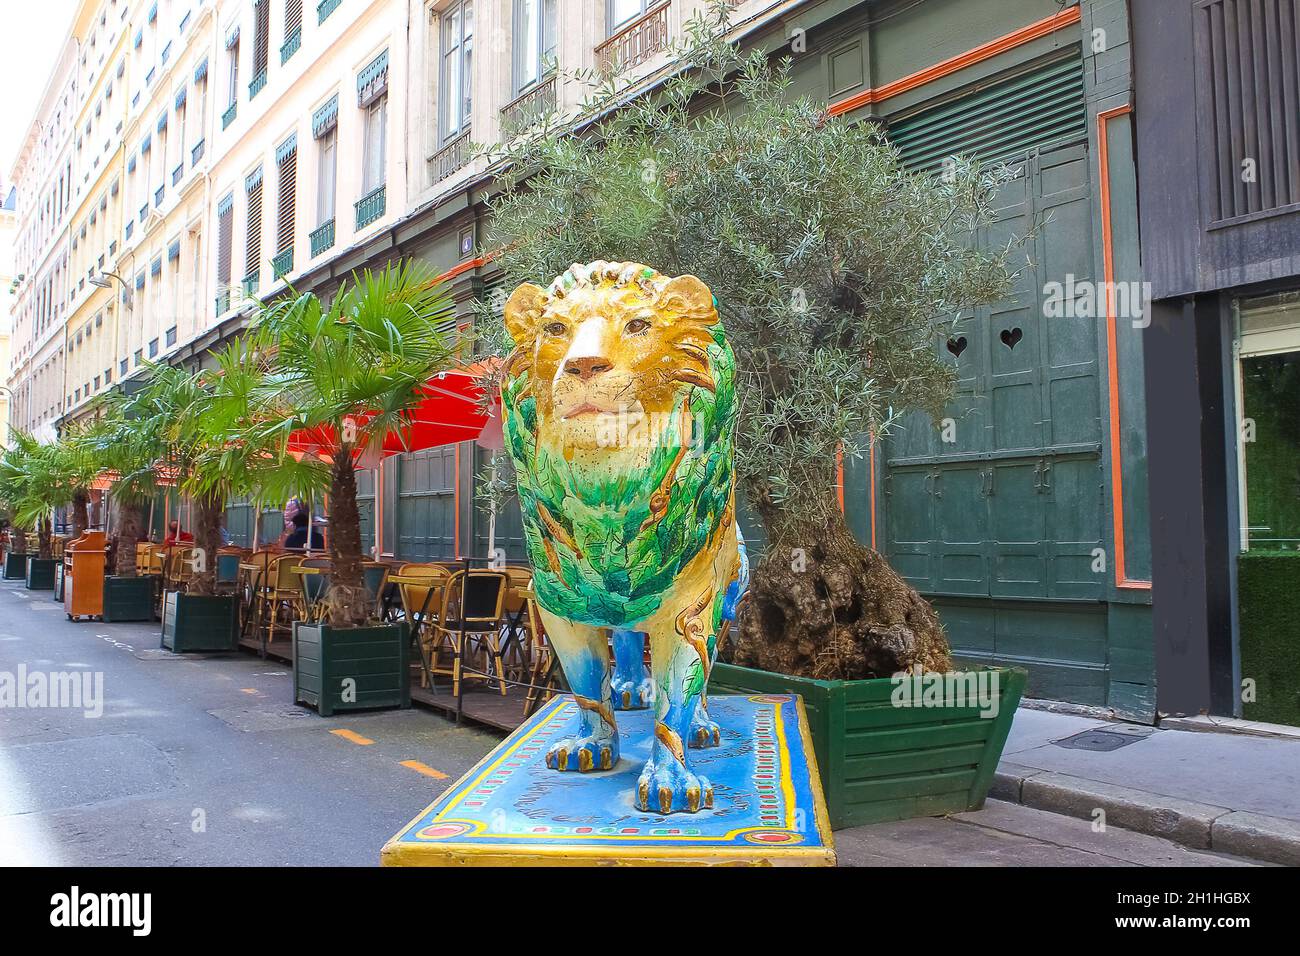 Lion, France - June 16, 2716: Lion statue at street at Lion, France on June 16, 2716 Stock Photo